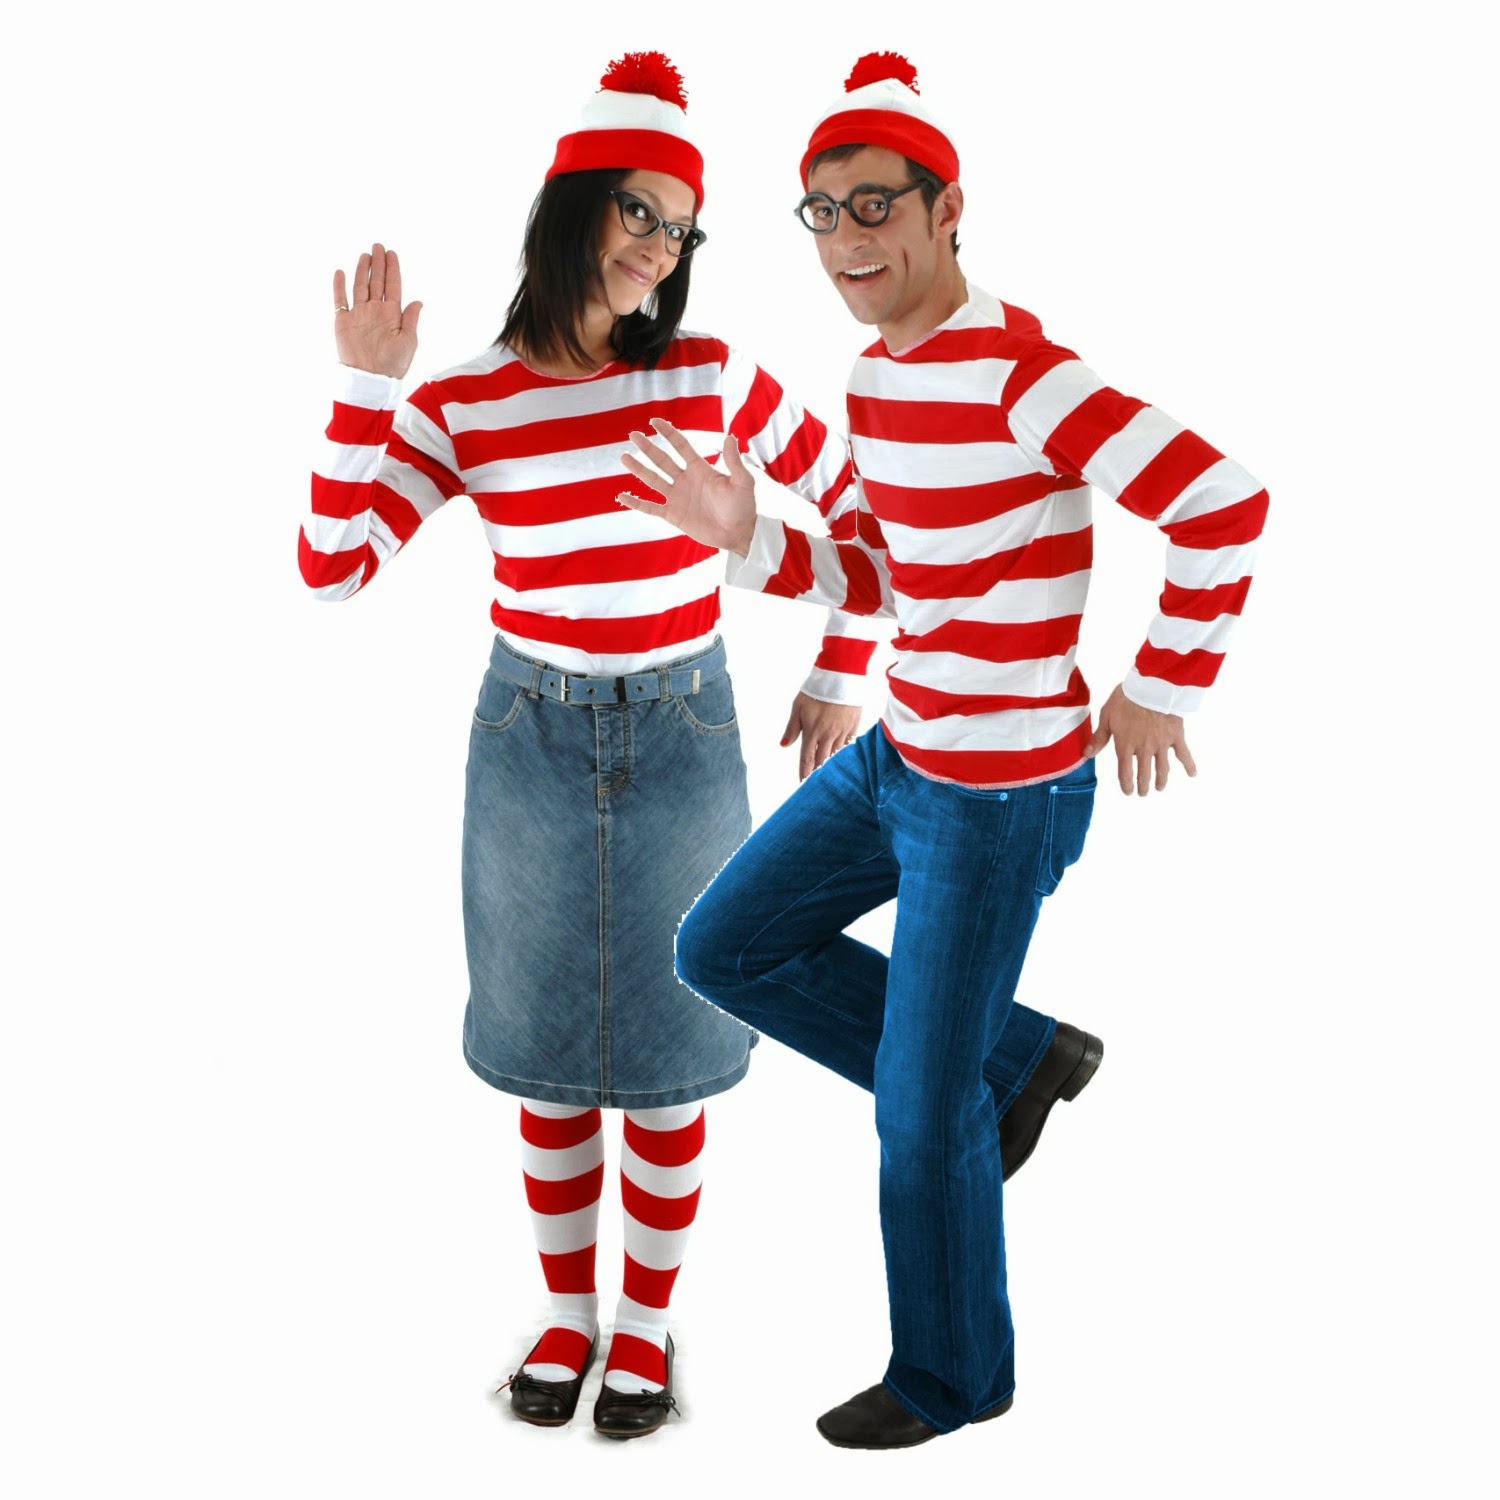 Daily Favor: Identifying Waldo